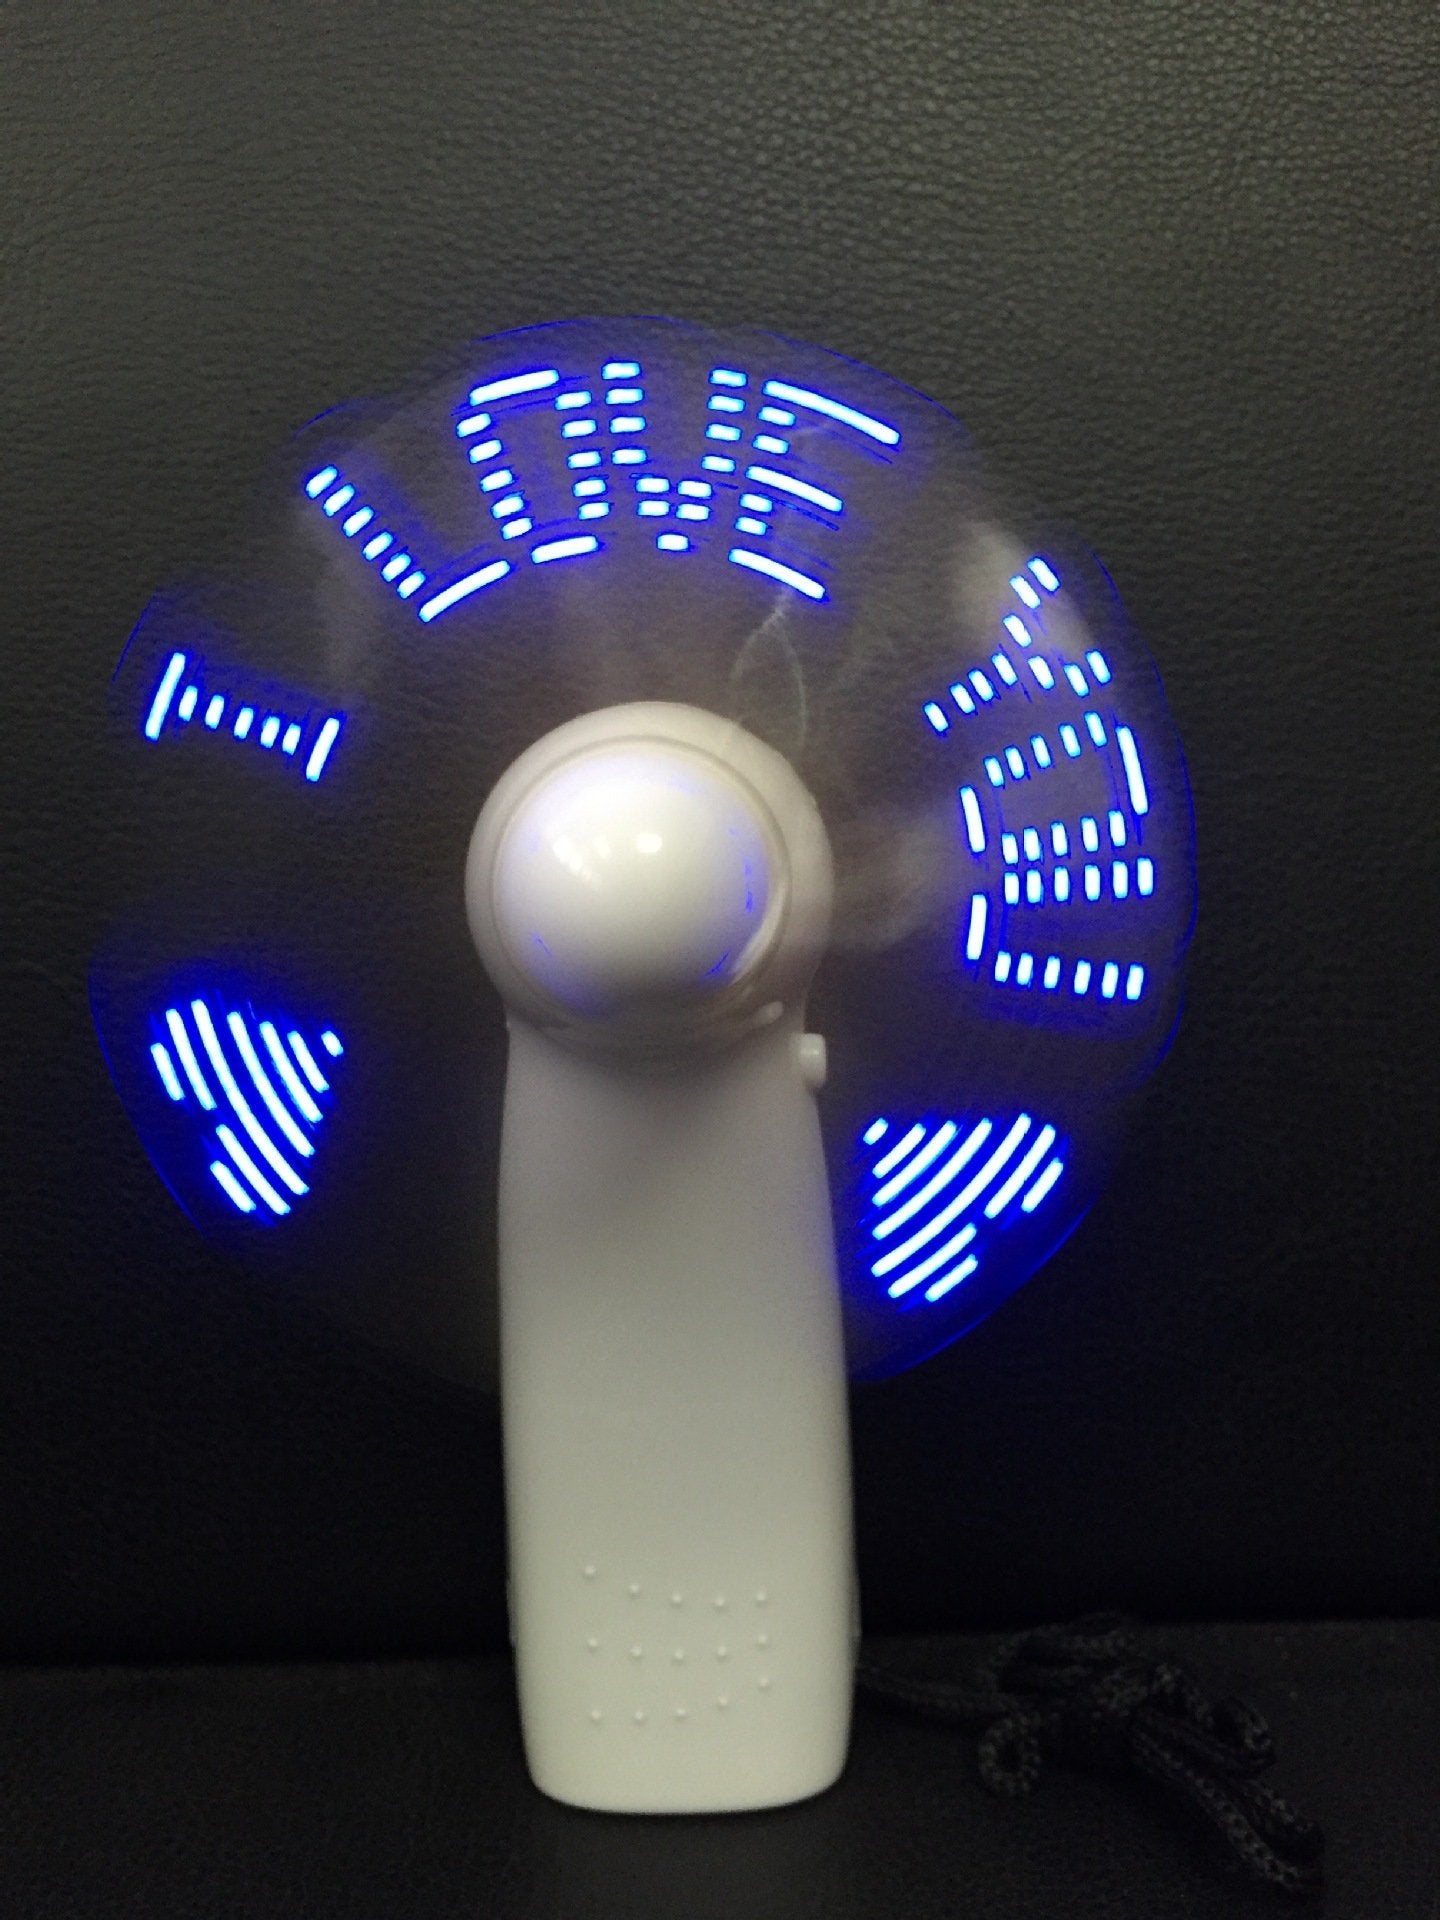 Printed LED Flash light mini fan , fan corporate gifts , Apex Gift